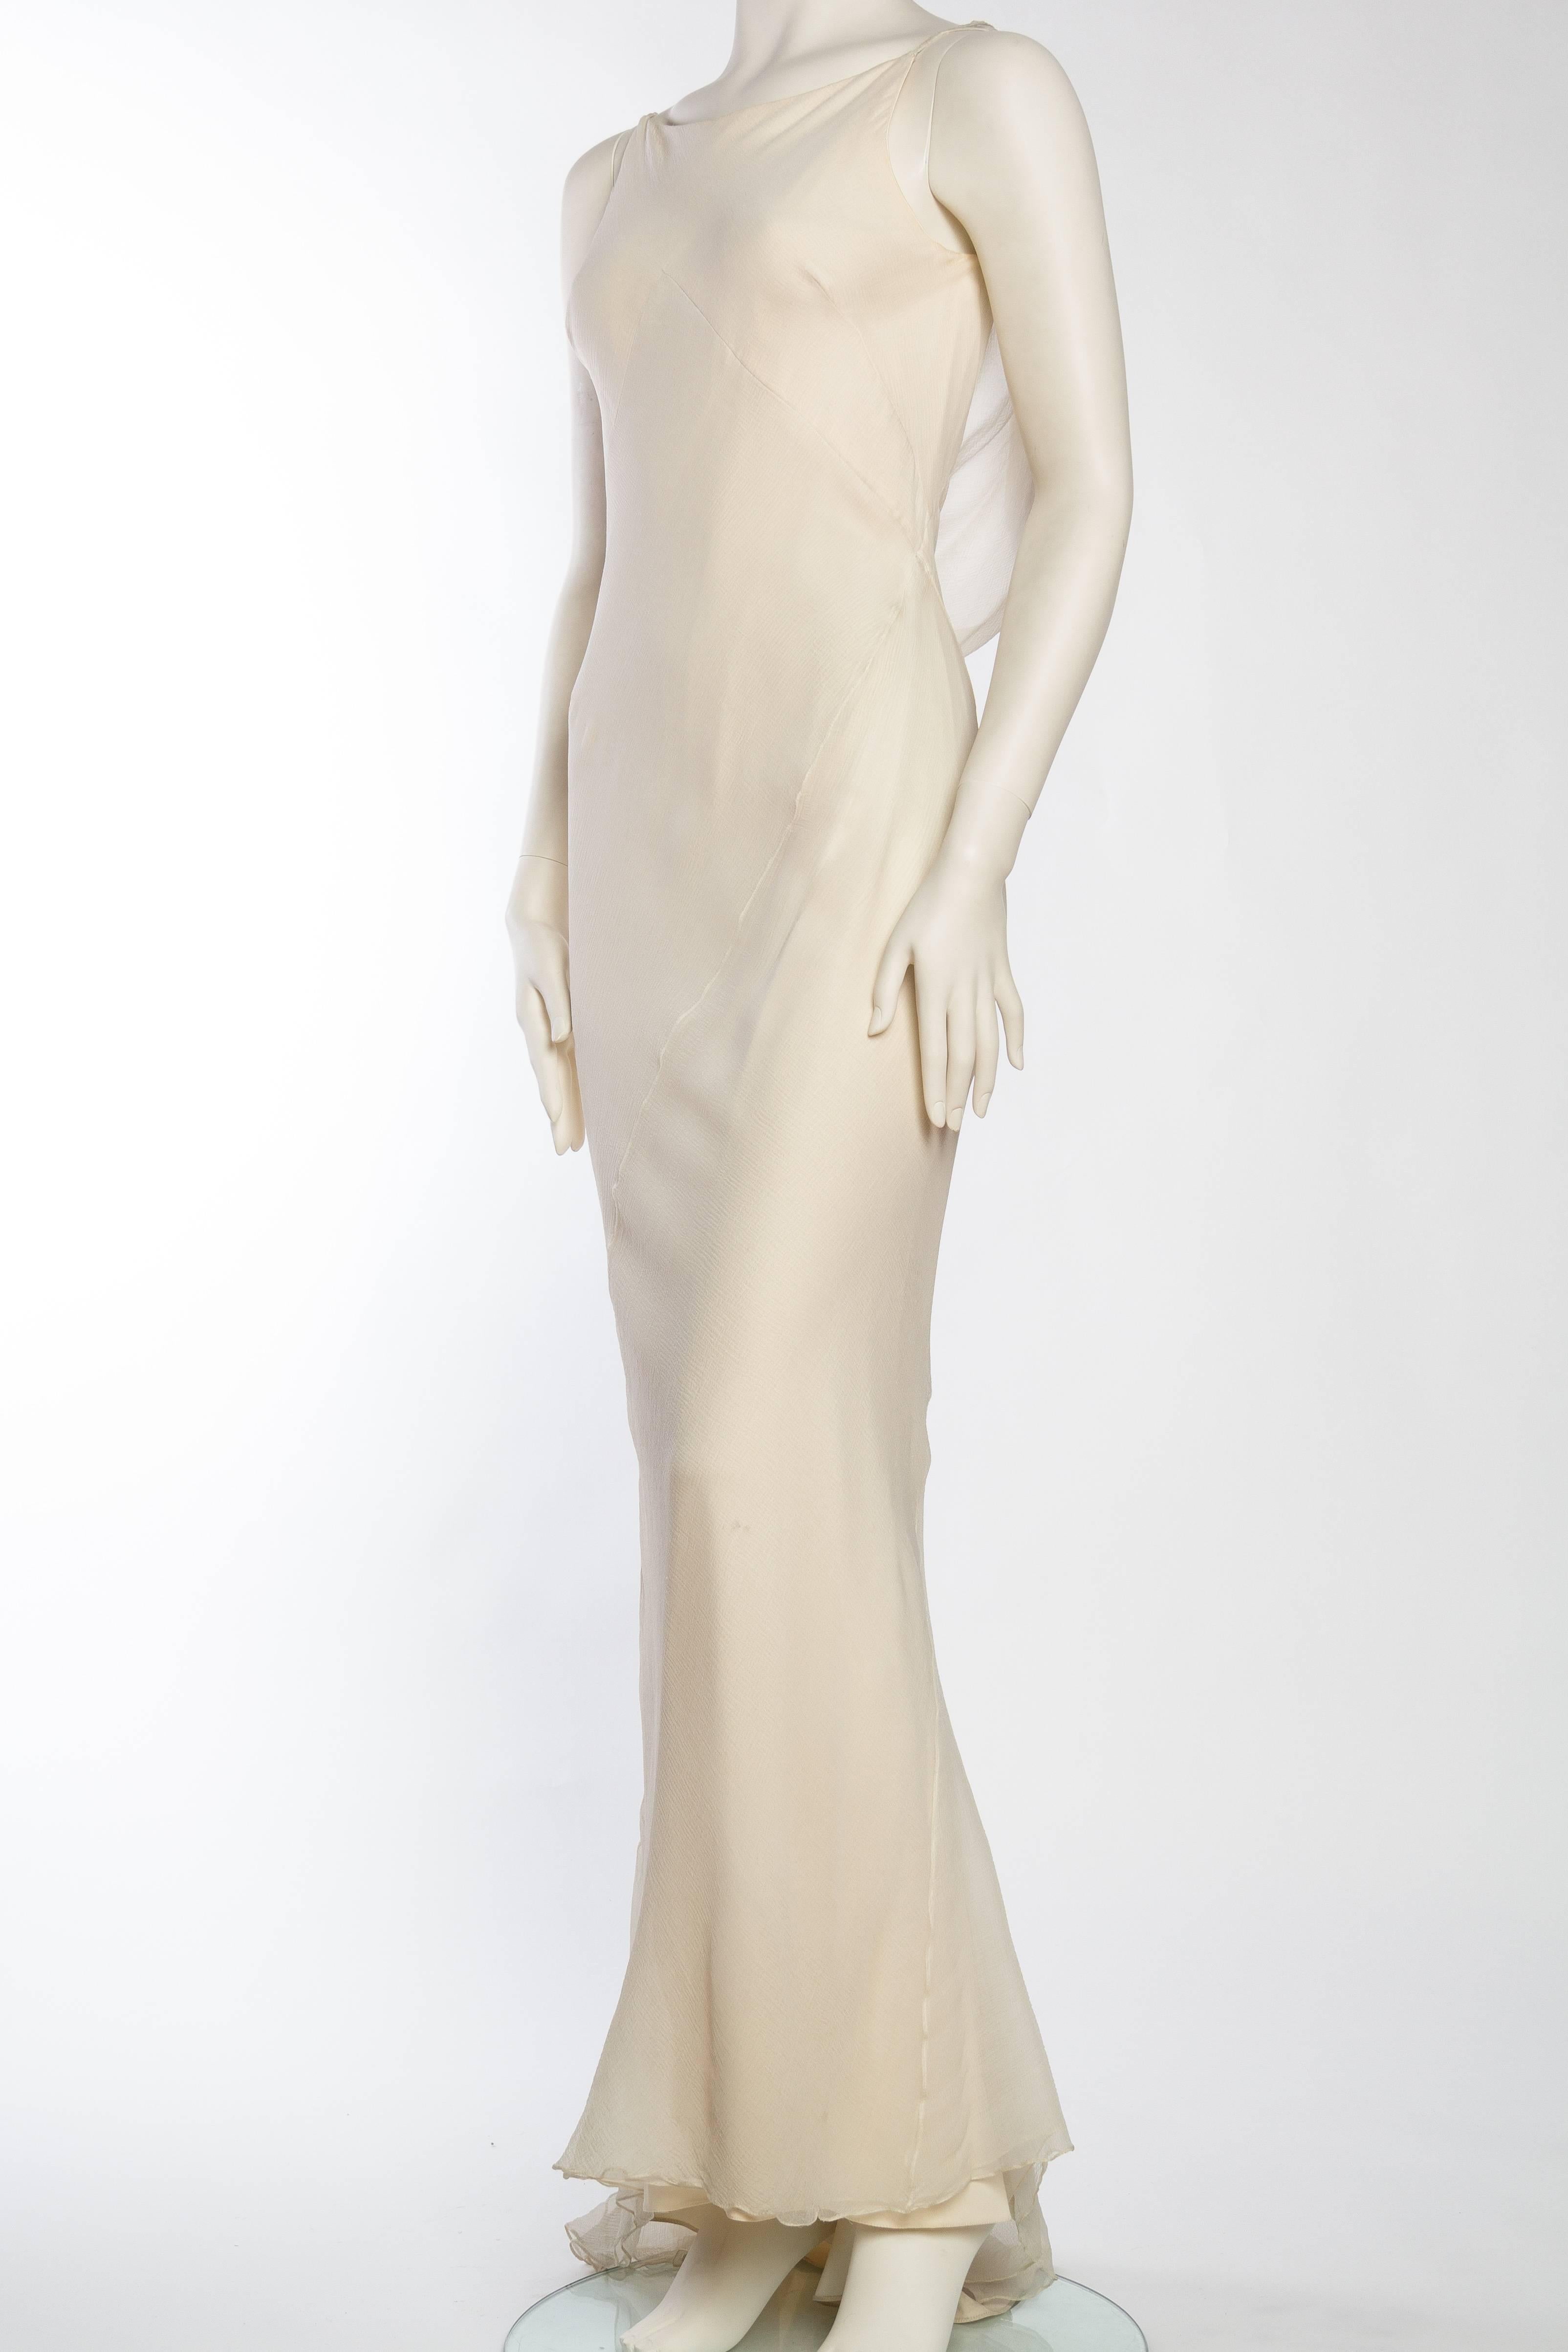 Beige 1990S DANES Ivory Silk Chiffon Bias Cut Backless 1930S Style Gown